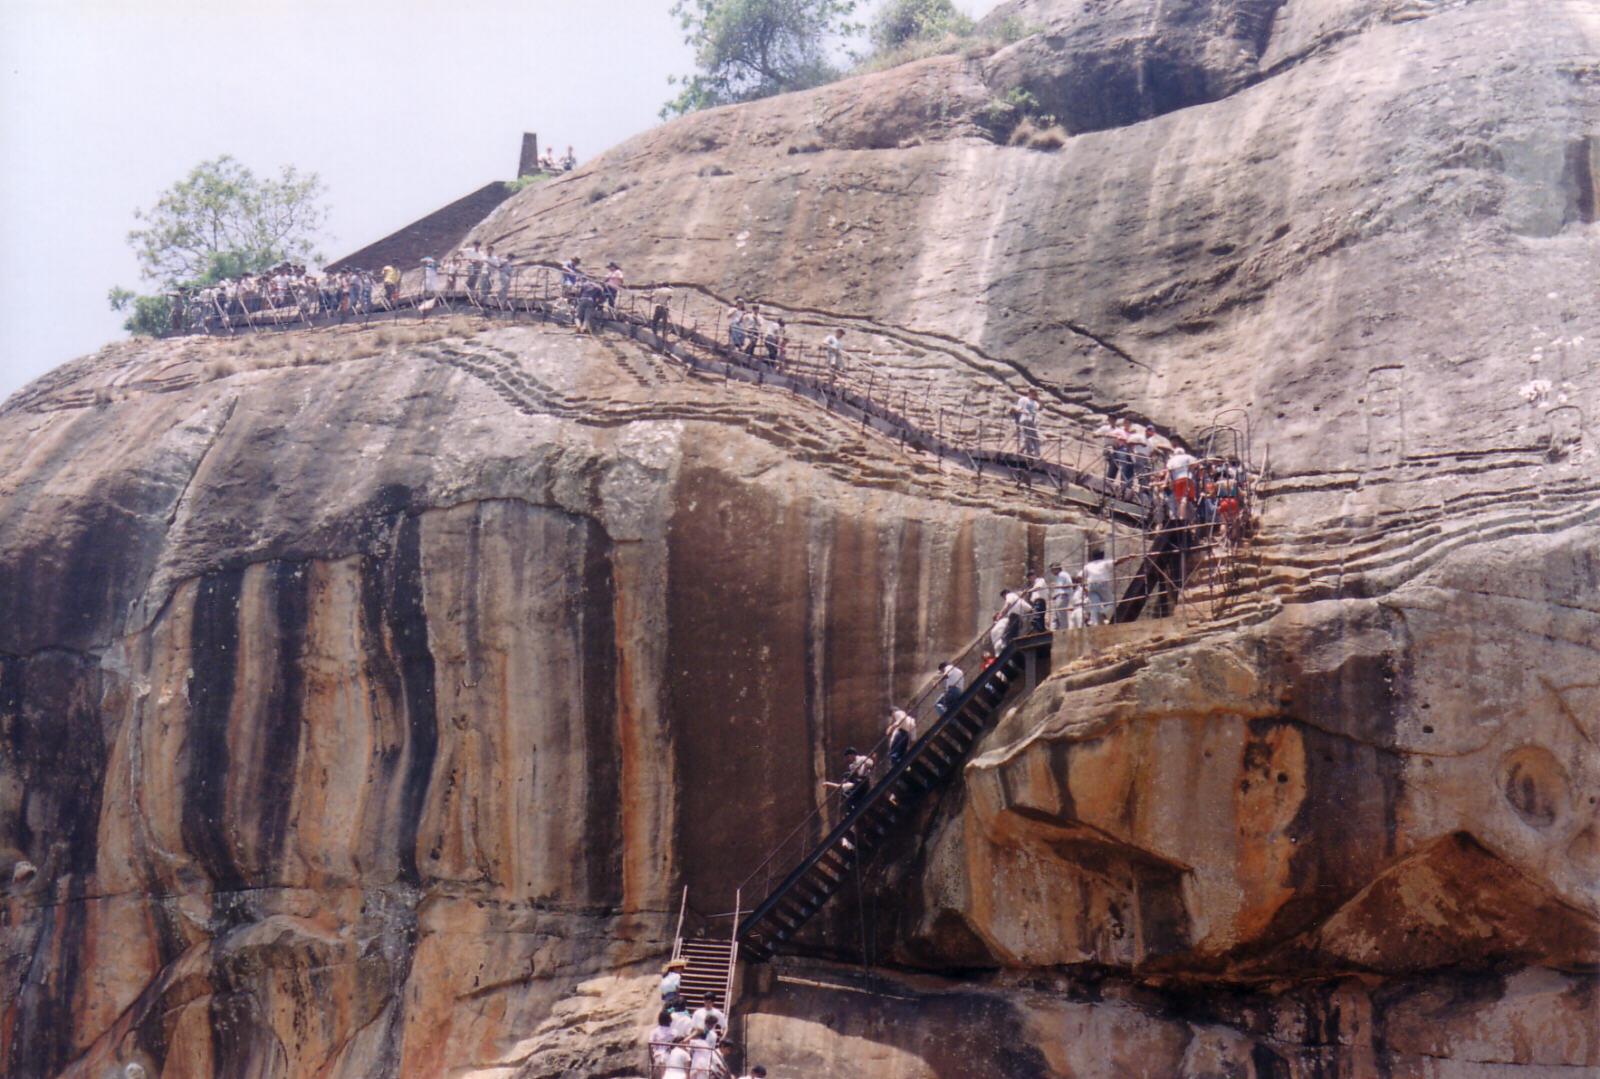 Part of the ascent to the summit of Sigiriya, Sri Lanka